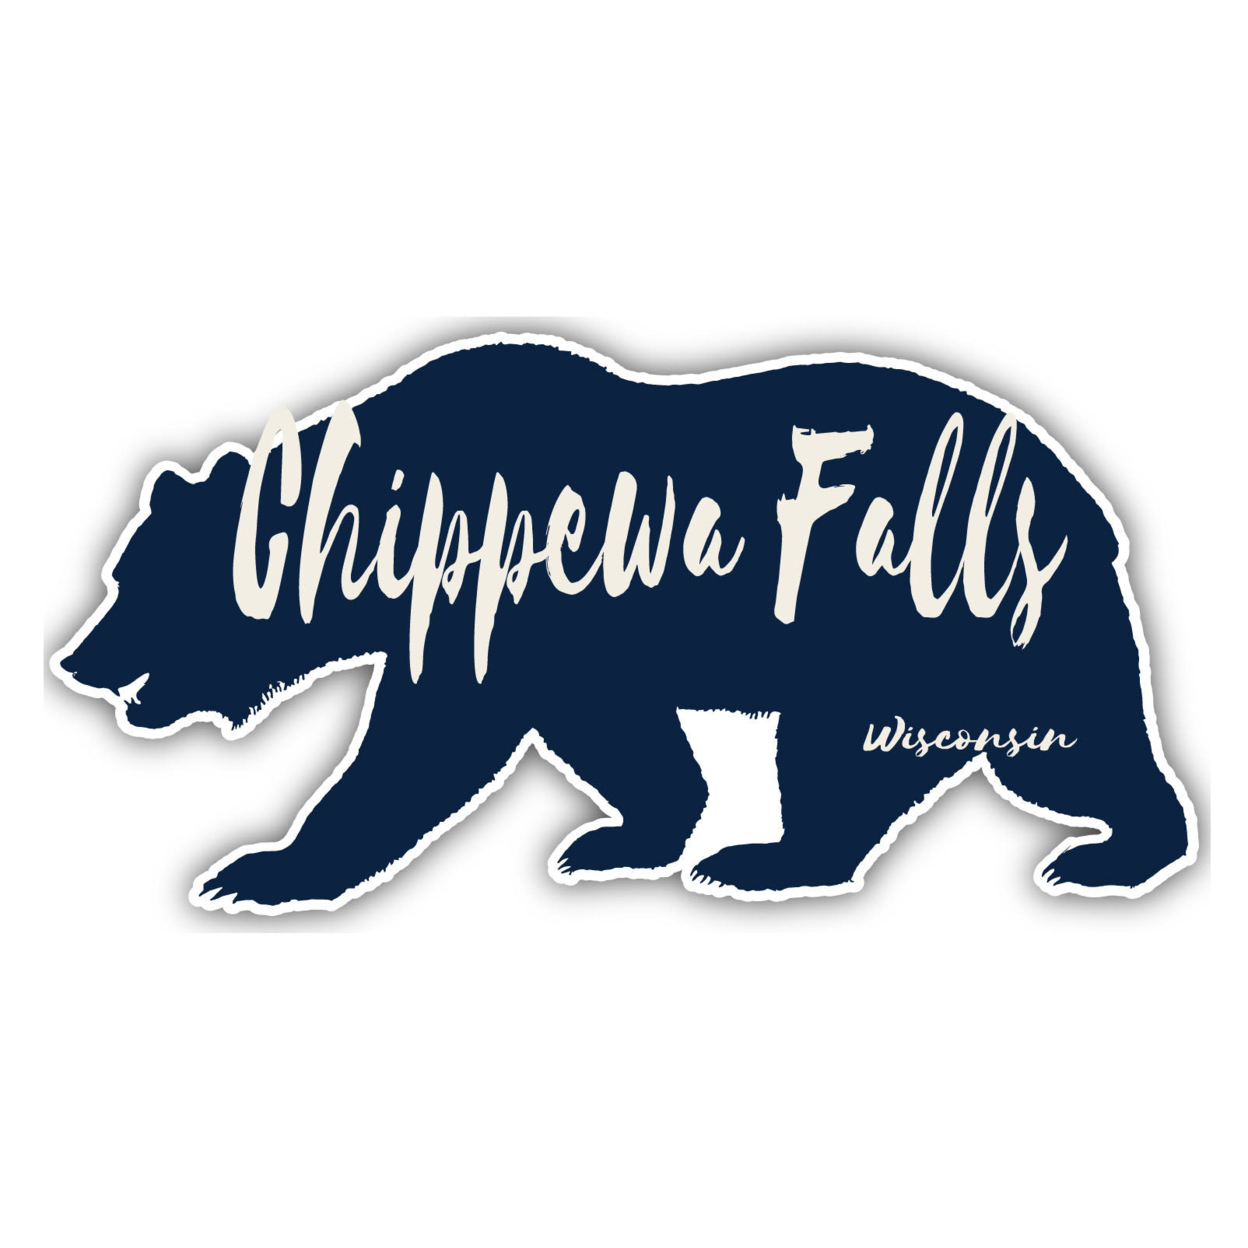 Chippewa Falls Wisconsin Souvenir Decorative Stickers (Choose Theme And Size) - Single Unit, 8-Inch, Bear